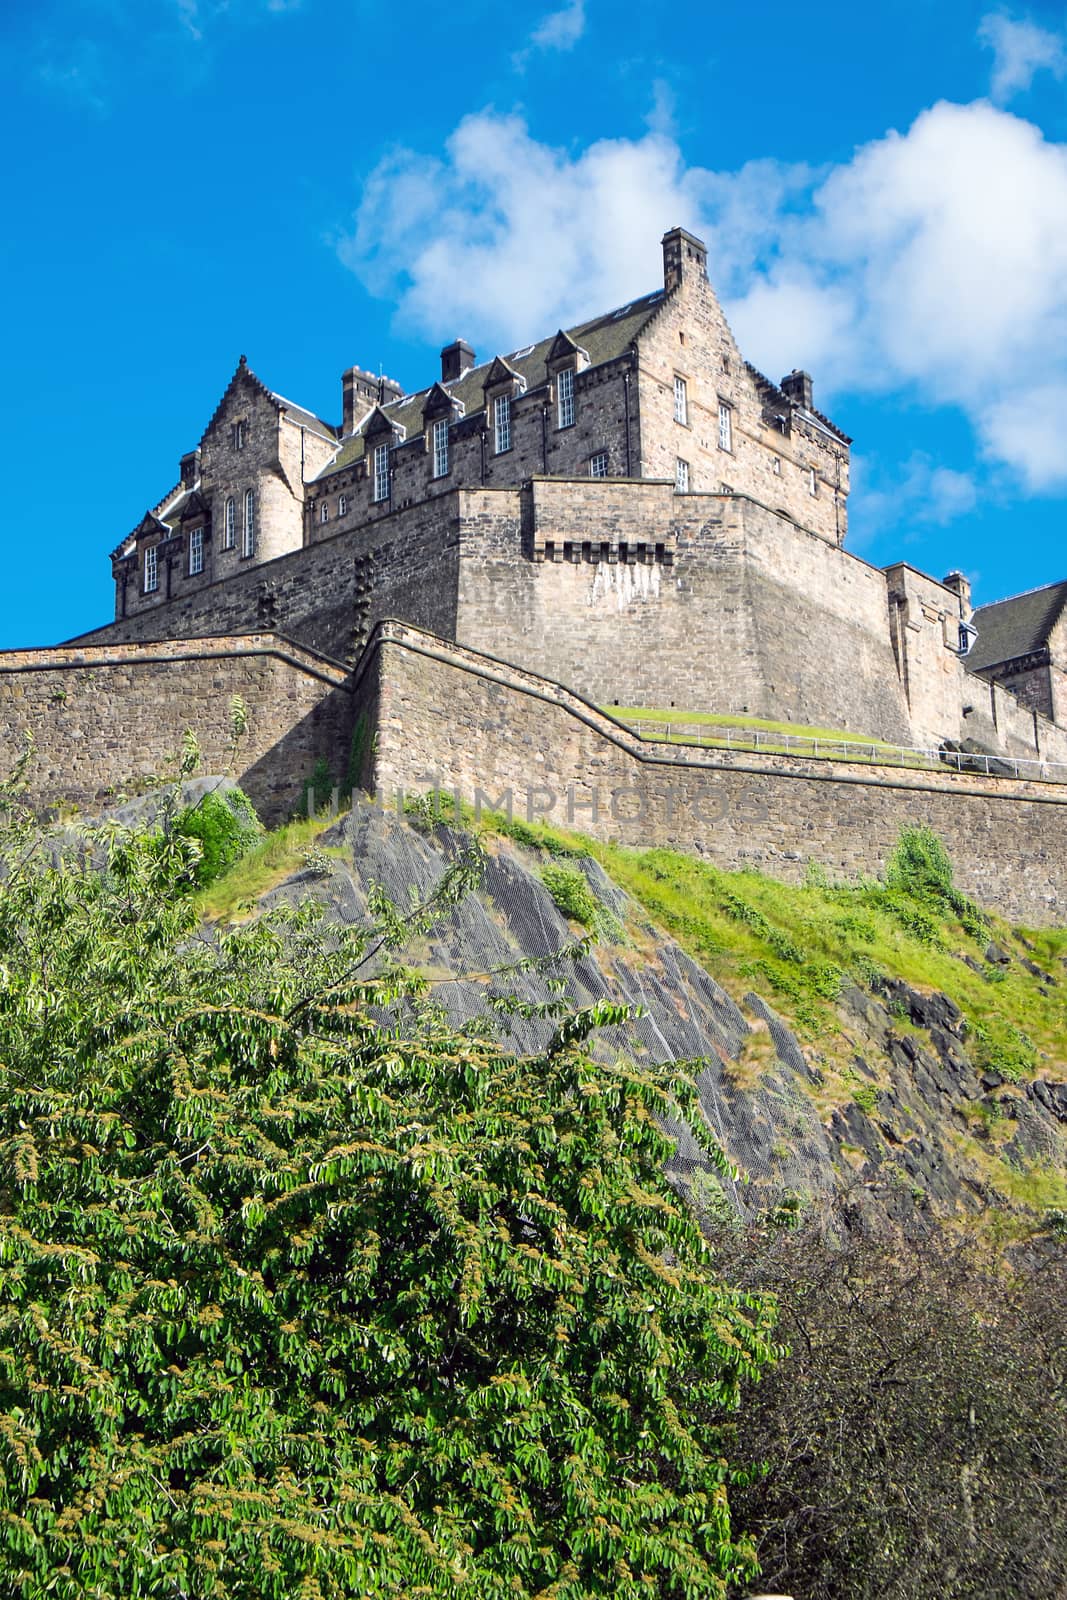 The impressing Edinburgh castle up on the hill